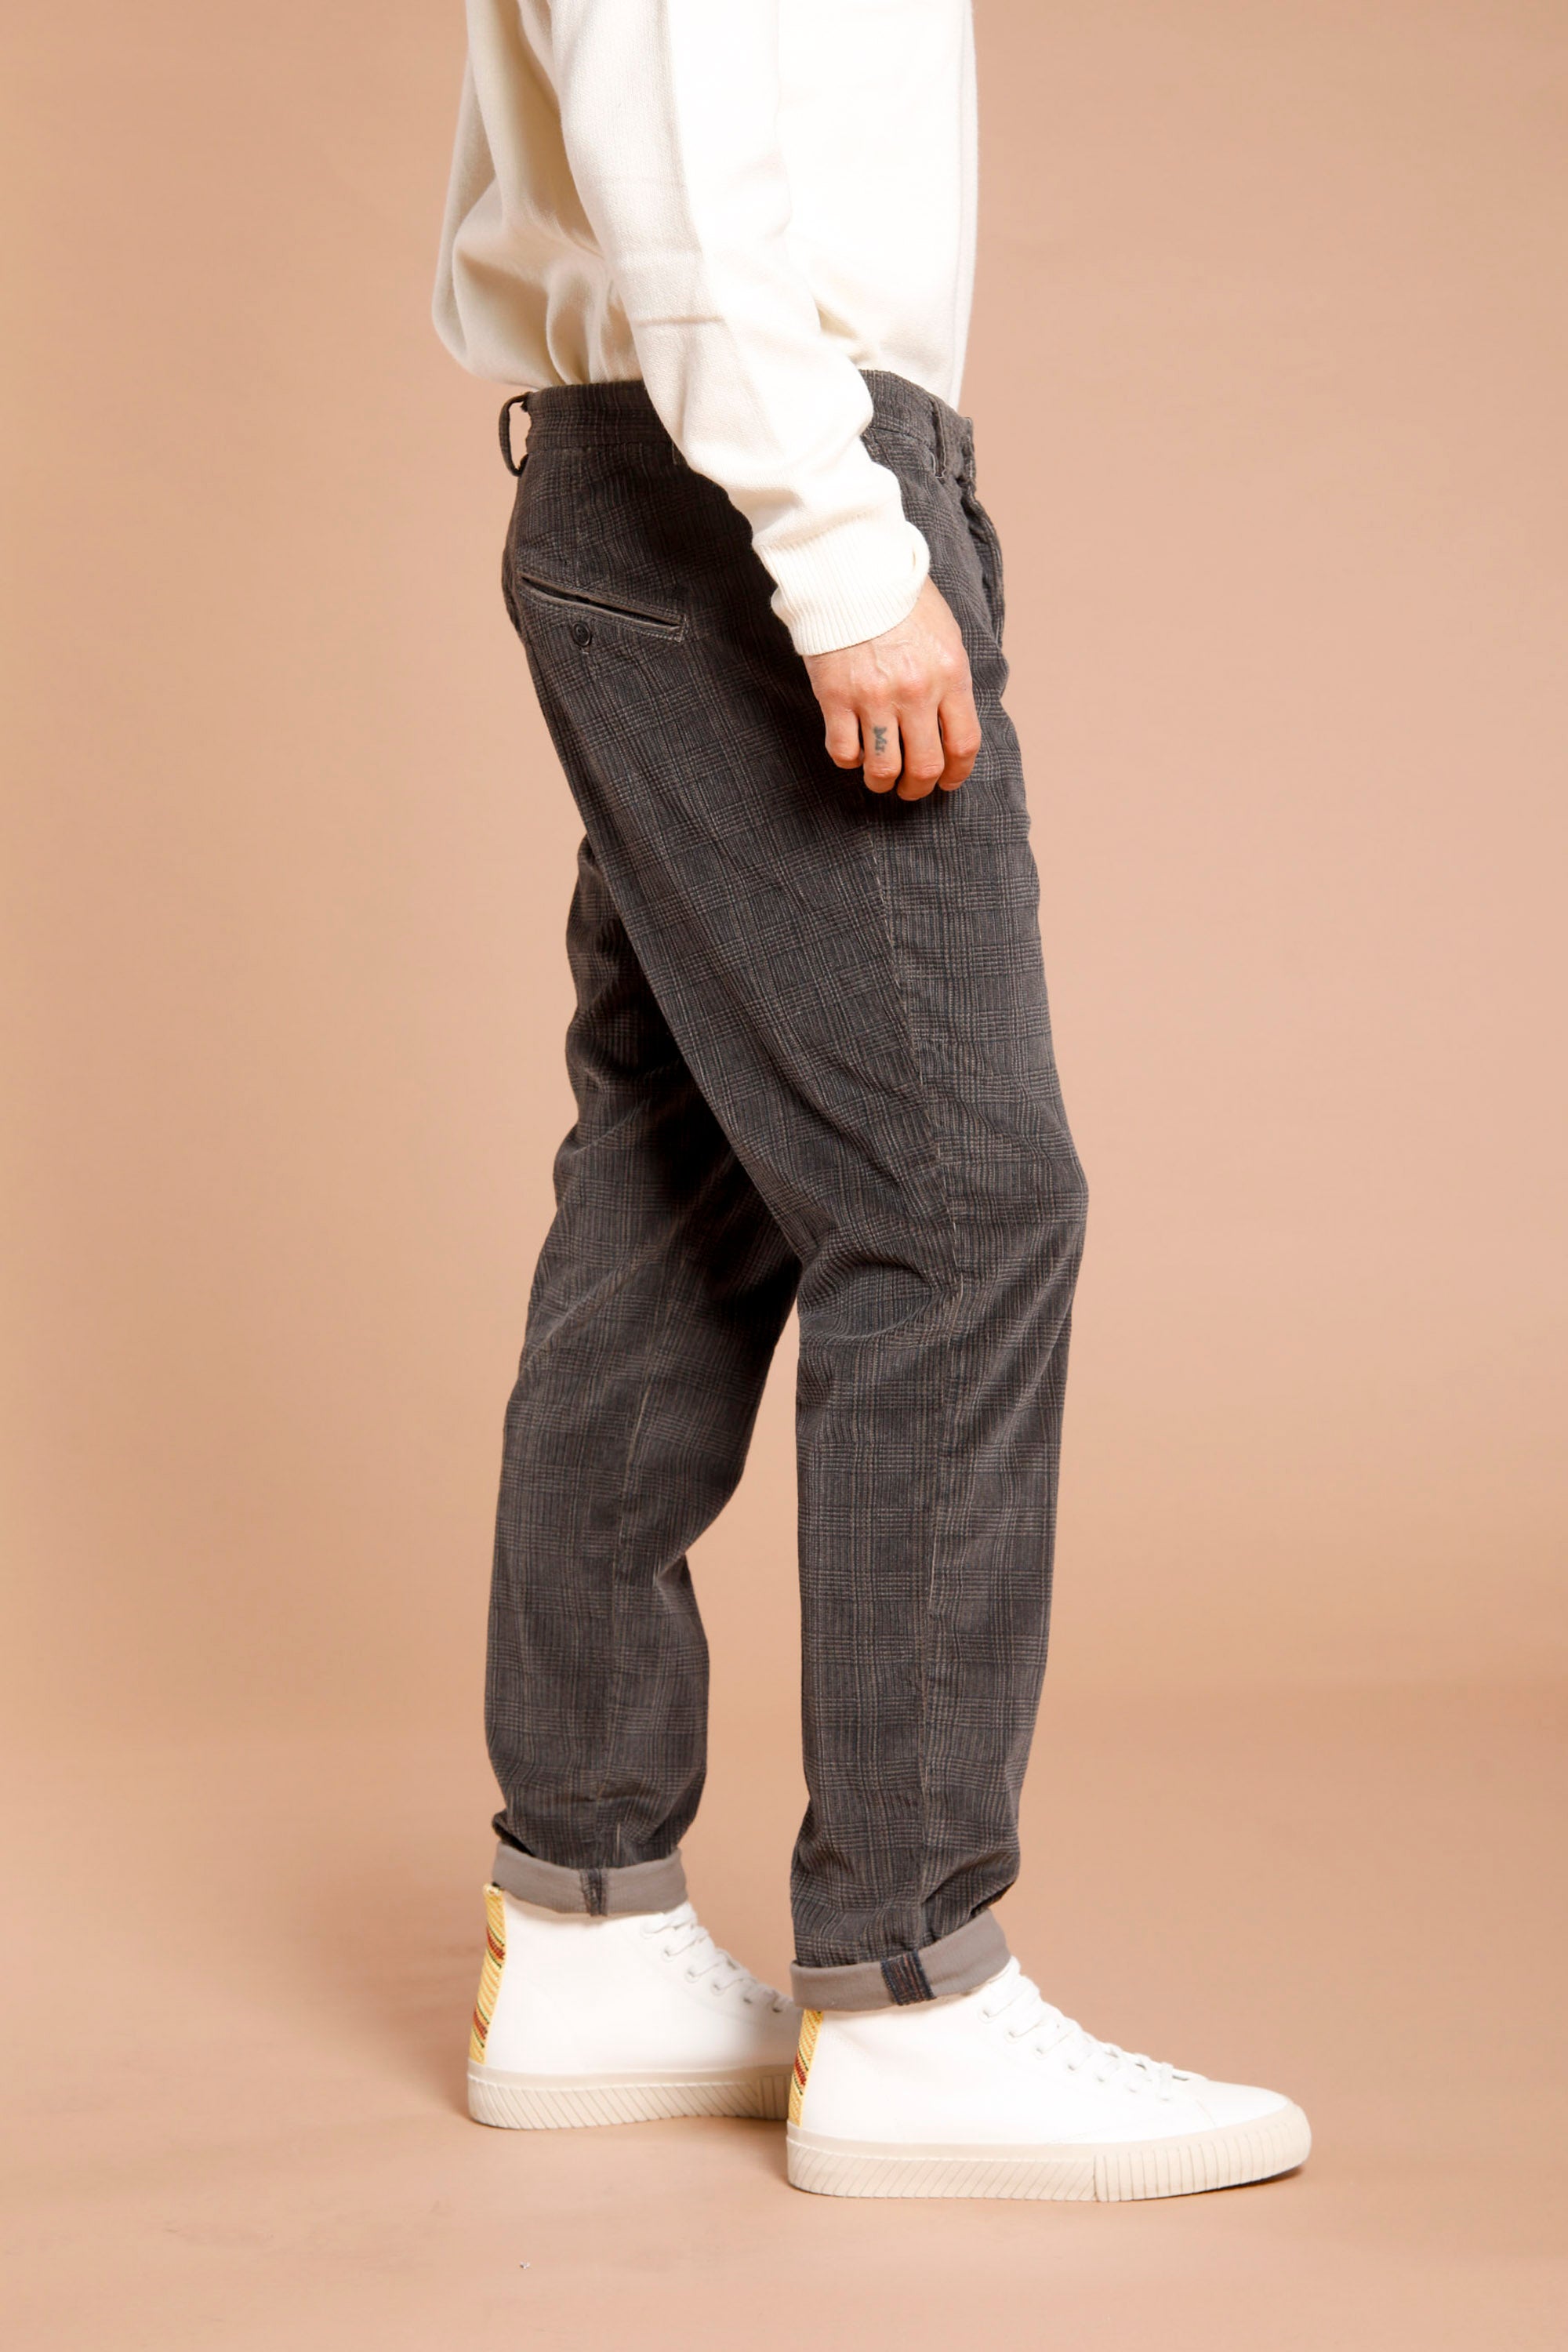 Osaka Style pantalon chino homme en velours à motif pied-de-poule coupe carrot